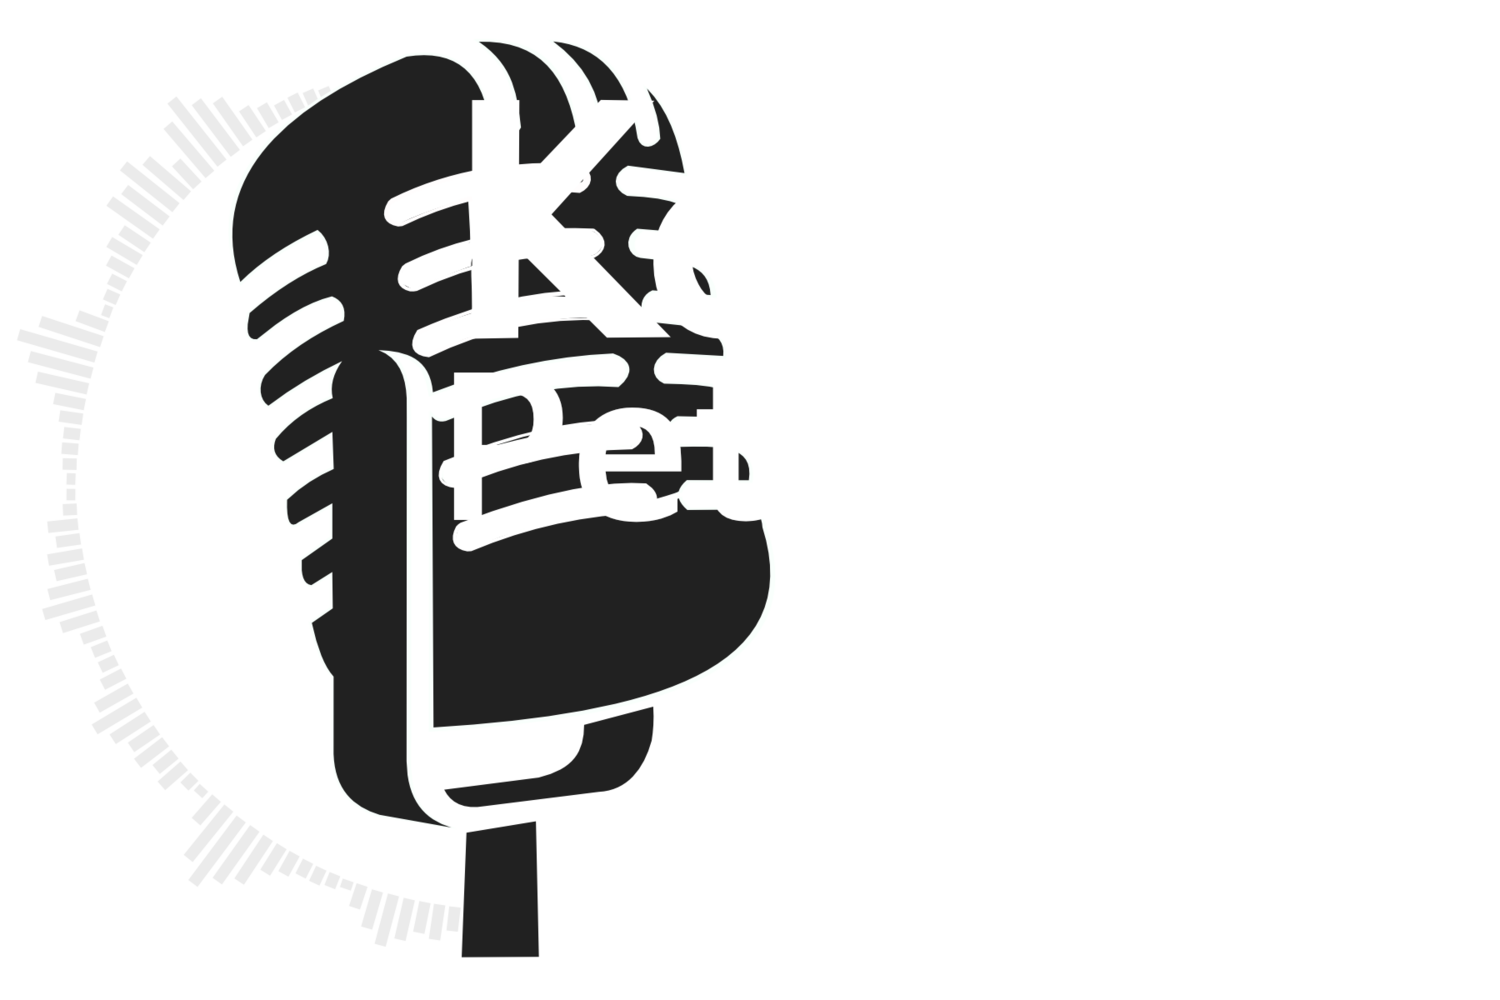 Kat Peterson - Voice Actress and Artist